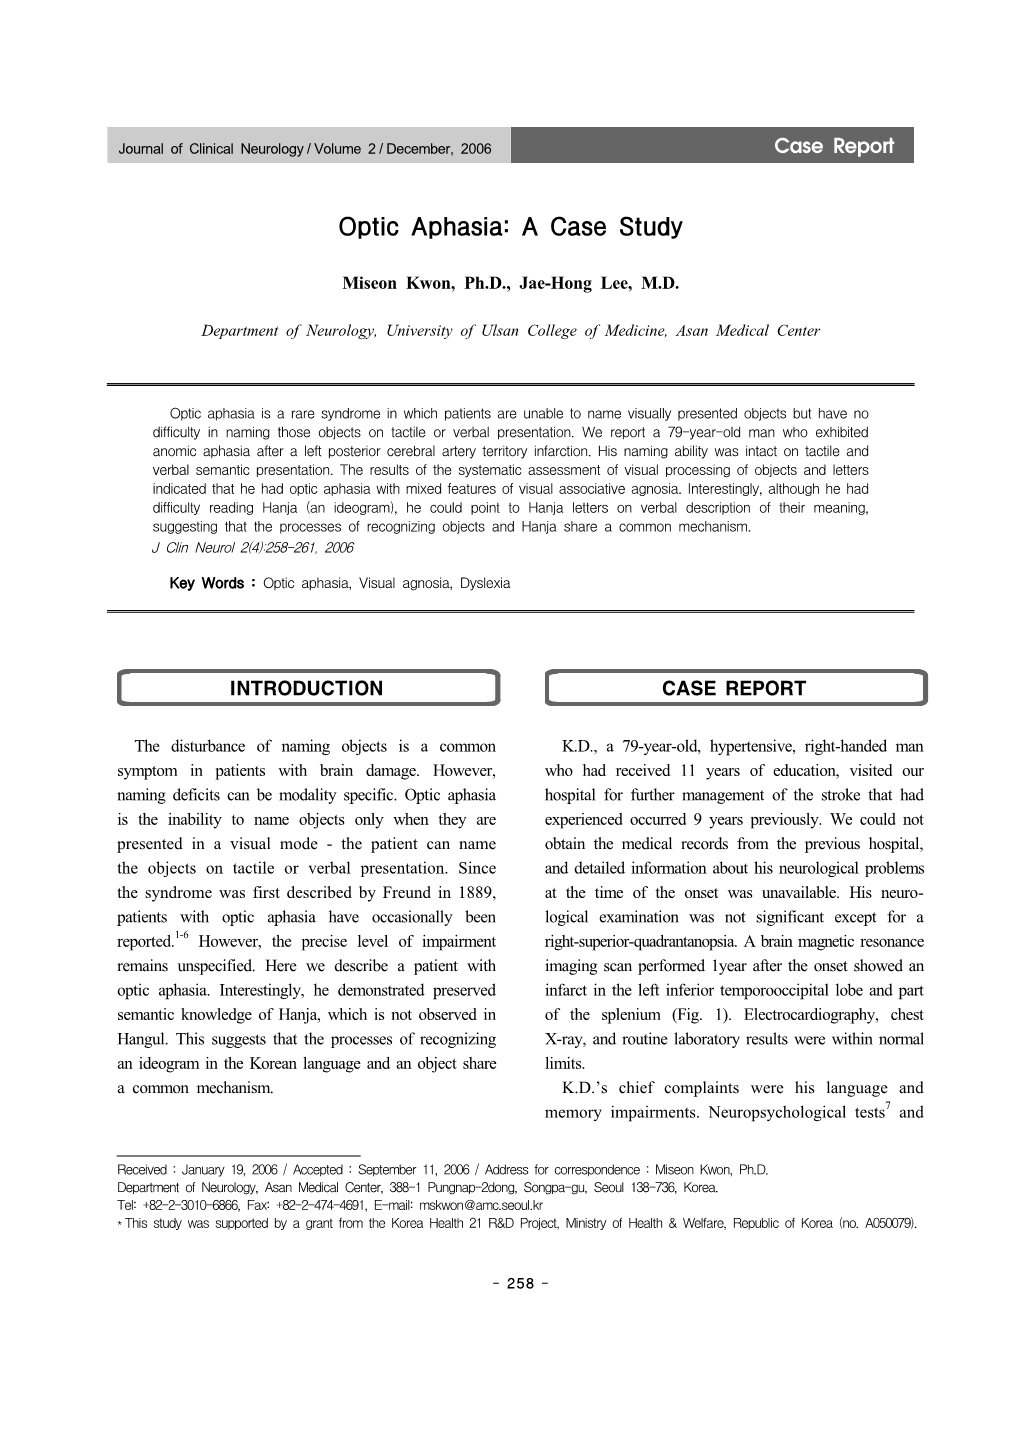 Optic Aphasia: a Case Study